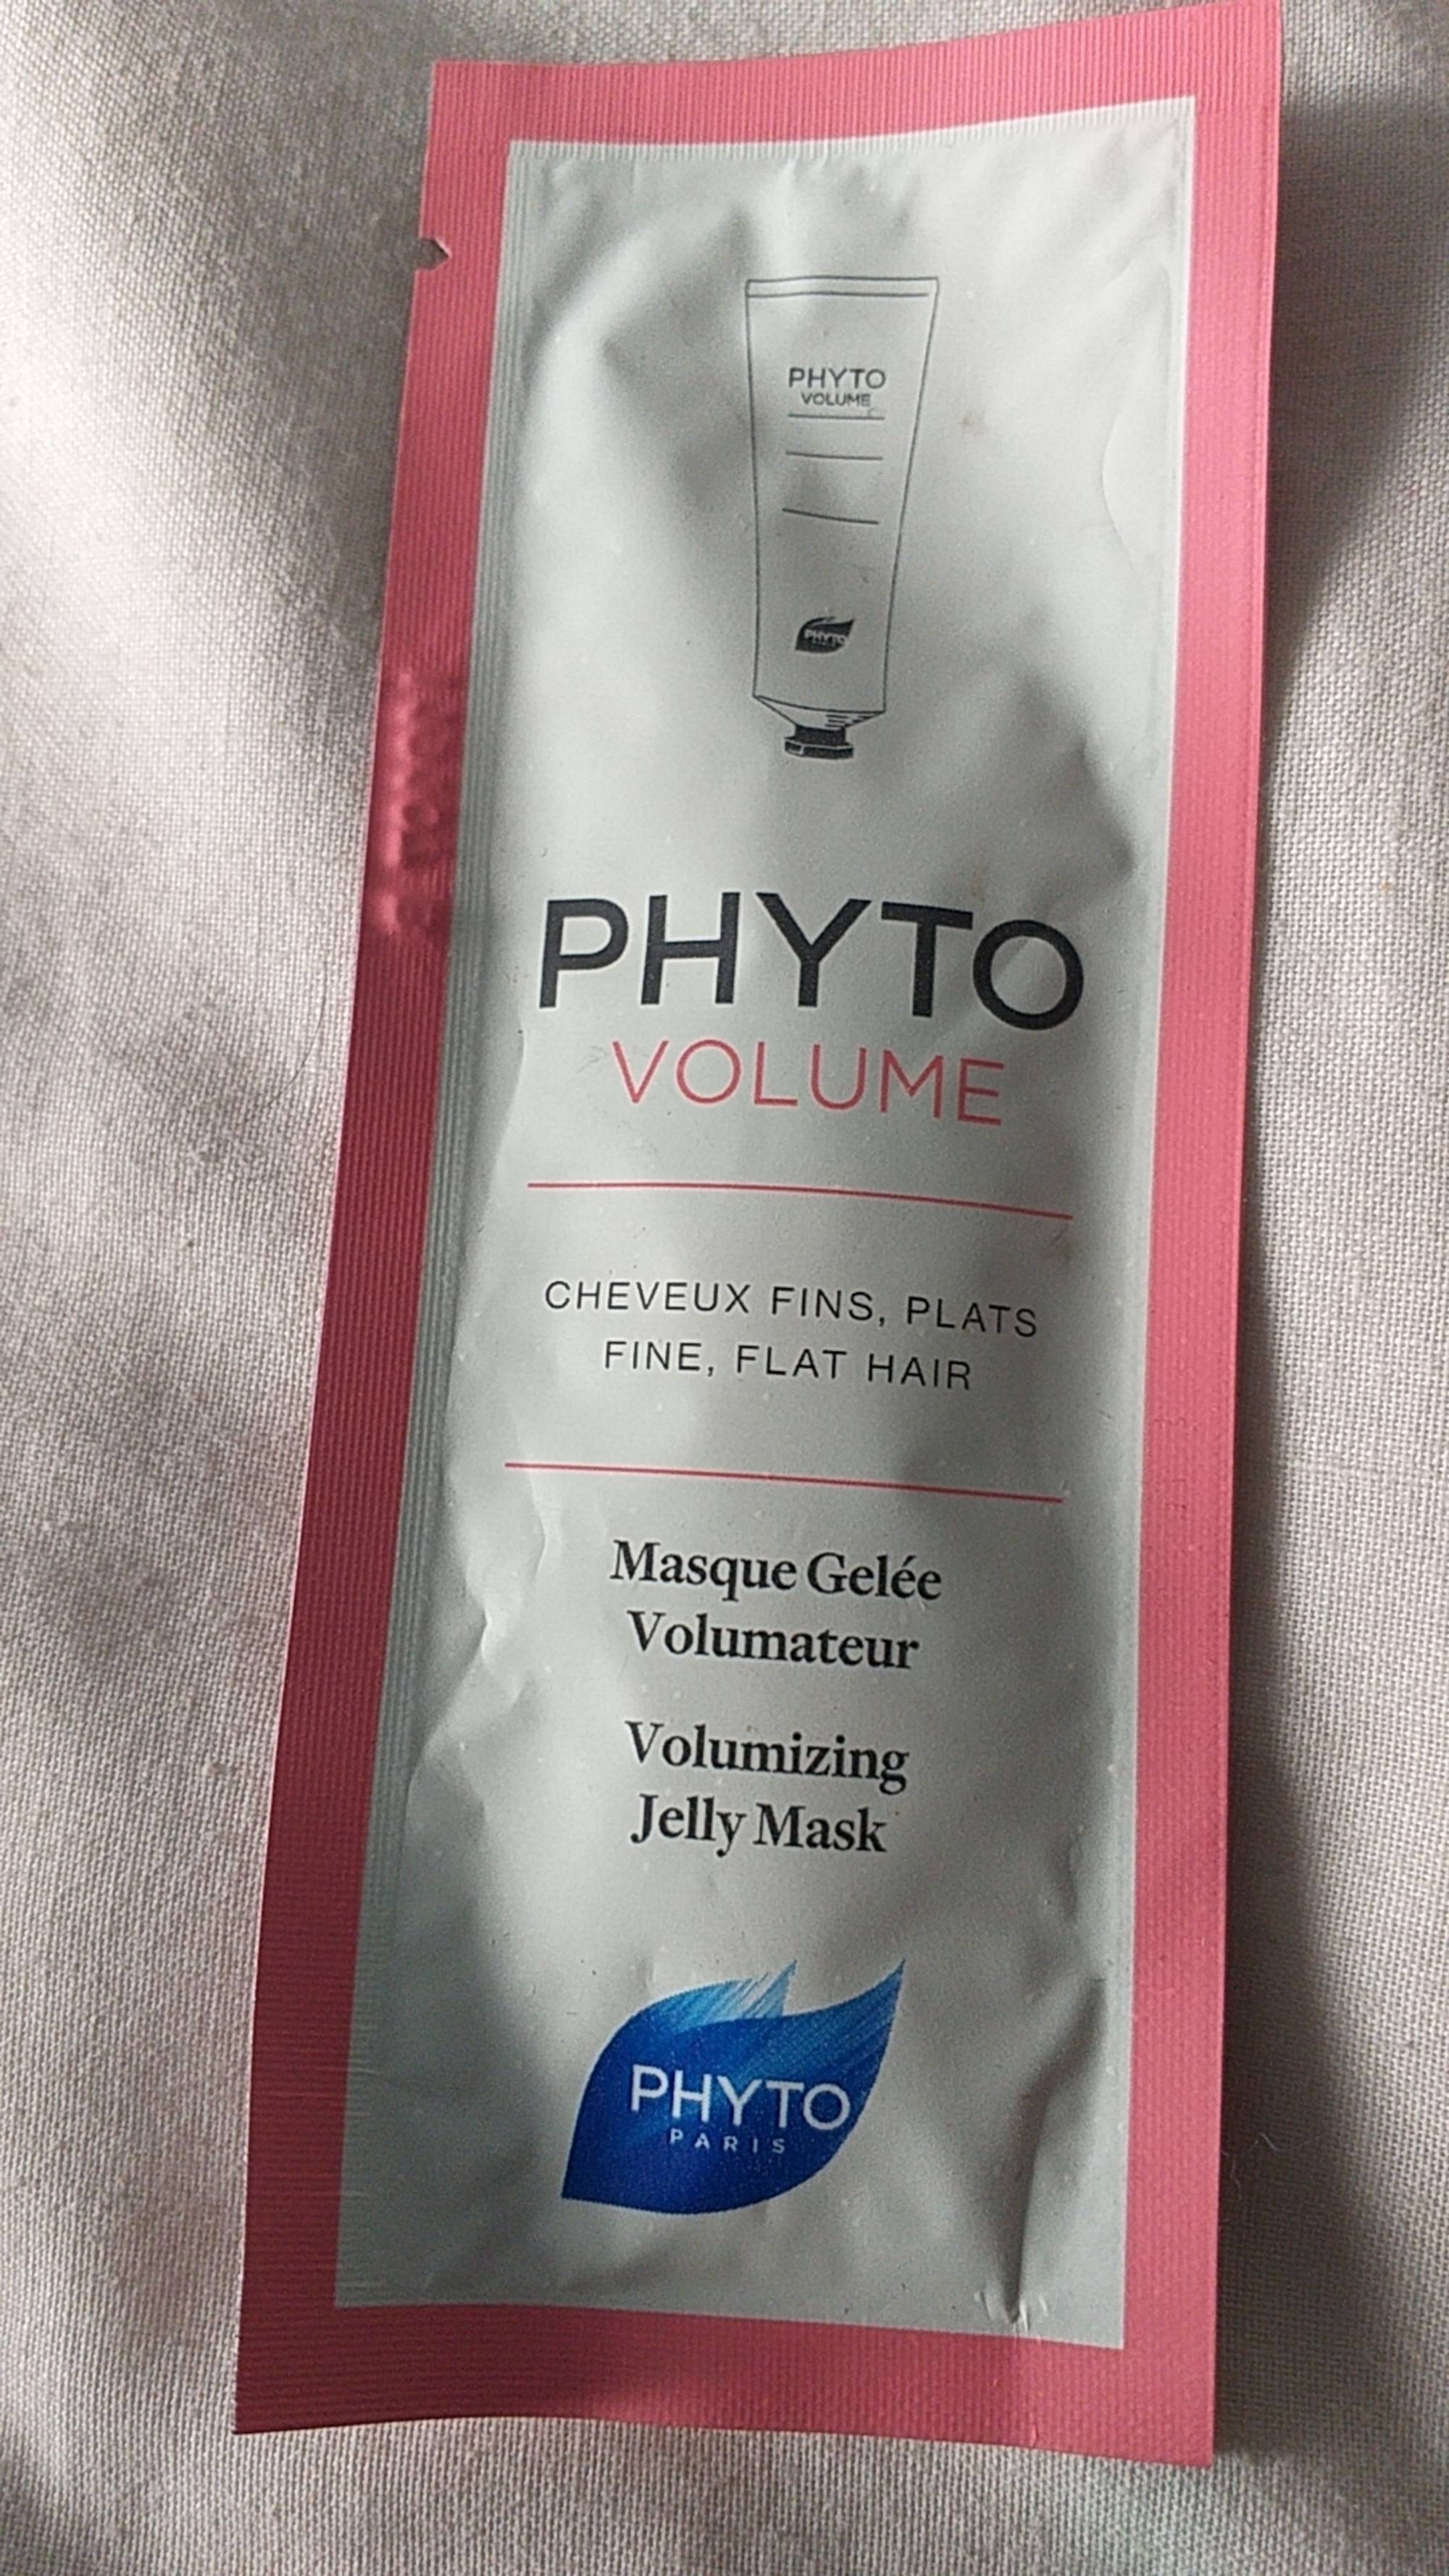 PHYTO - Phyto volume - Masque gelée volumateur